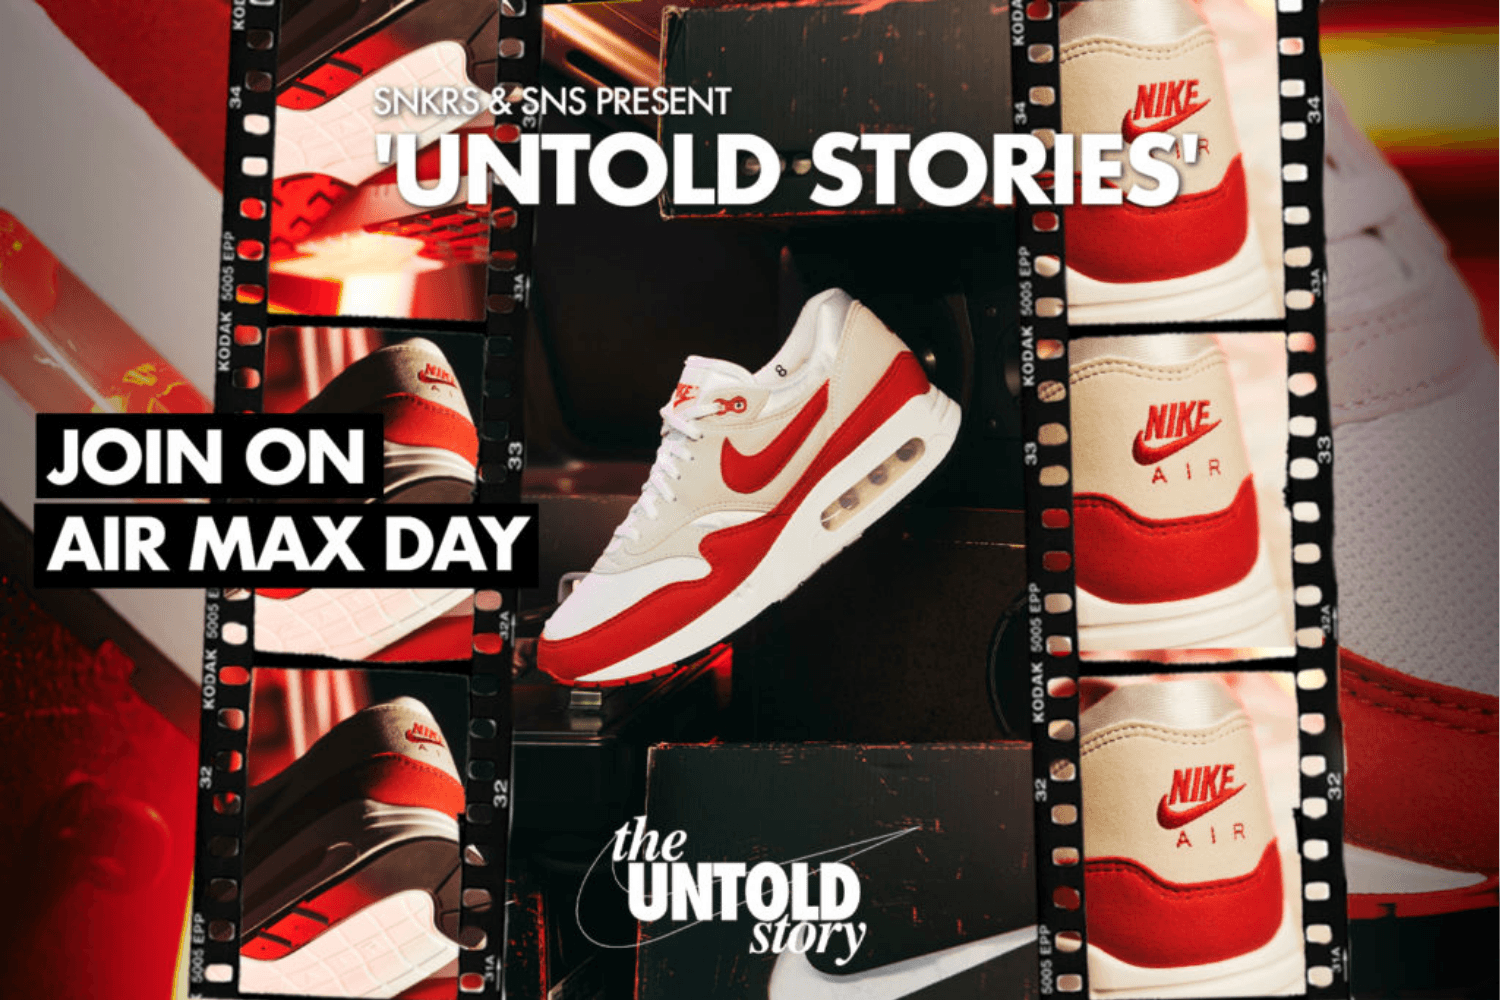 Das Nike 'Untold Stories' Event in Paris am Air Max Day